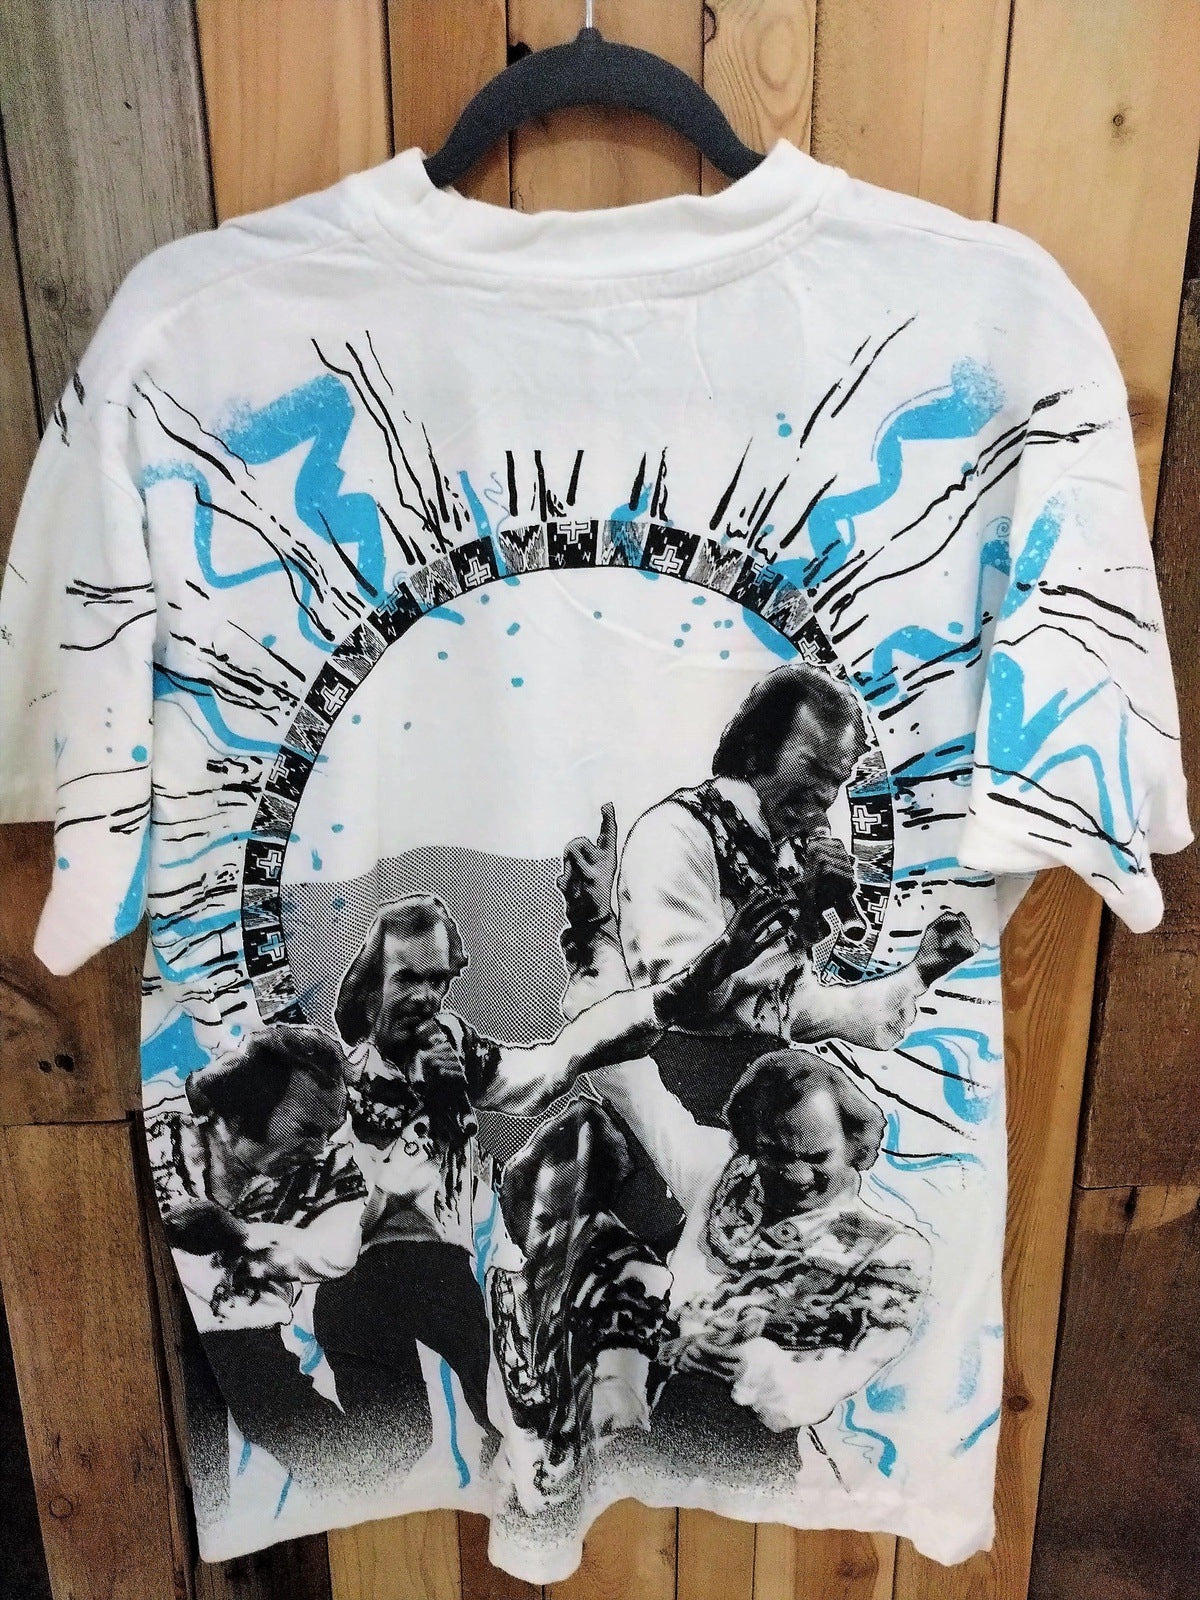 Neil Diamond "In the Round 1992" Original Tour T Shirt Size XL 183792DQ